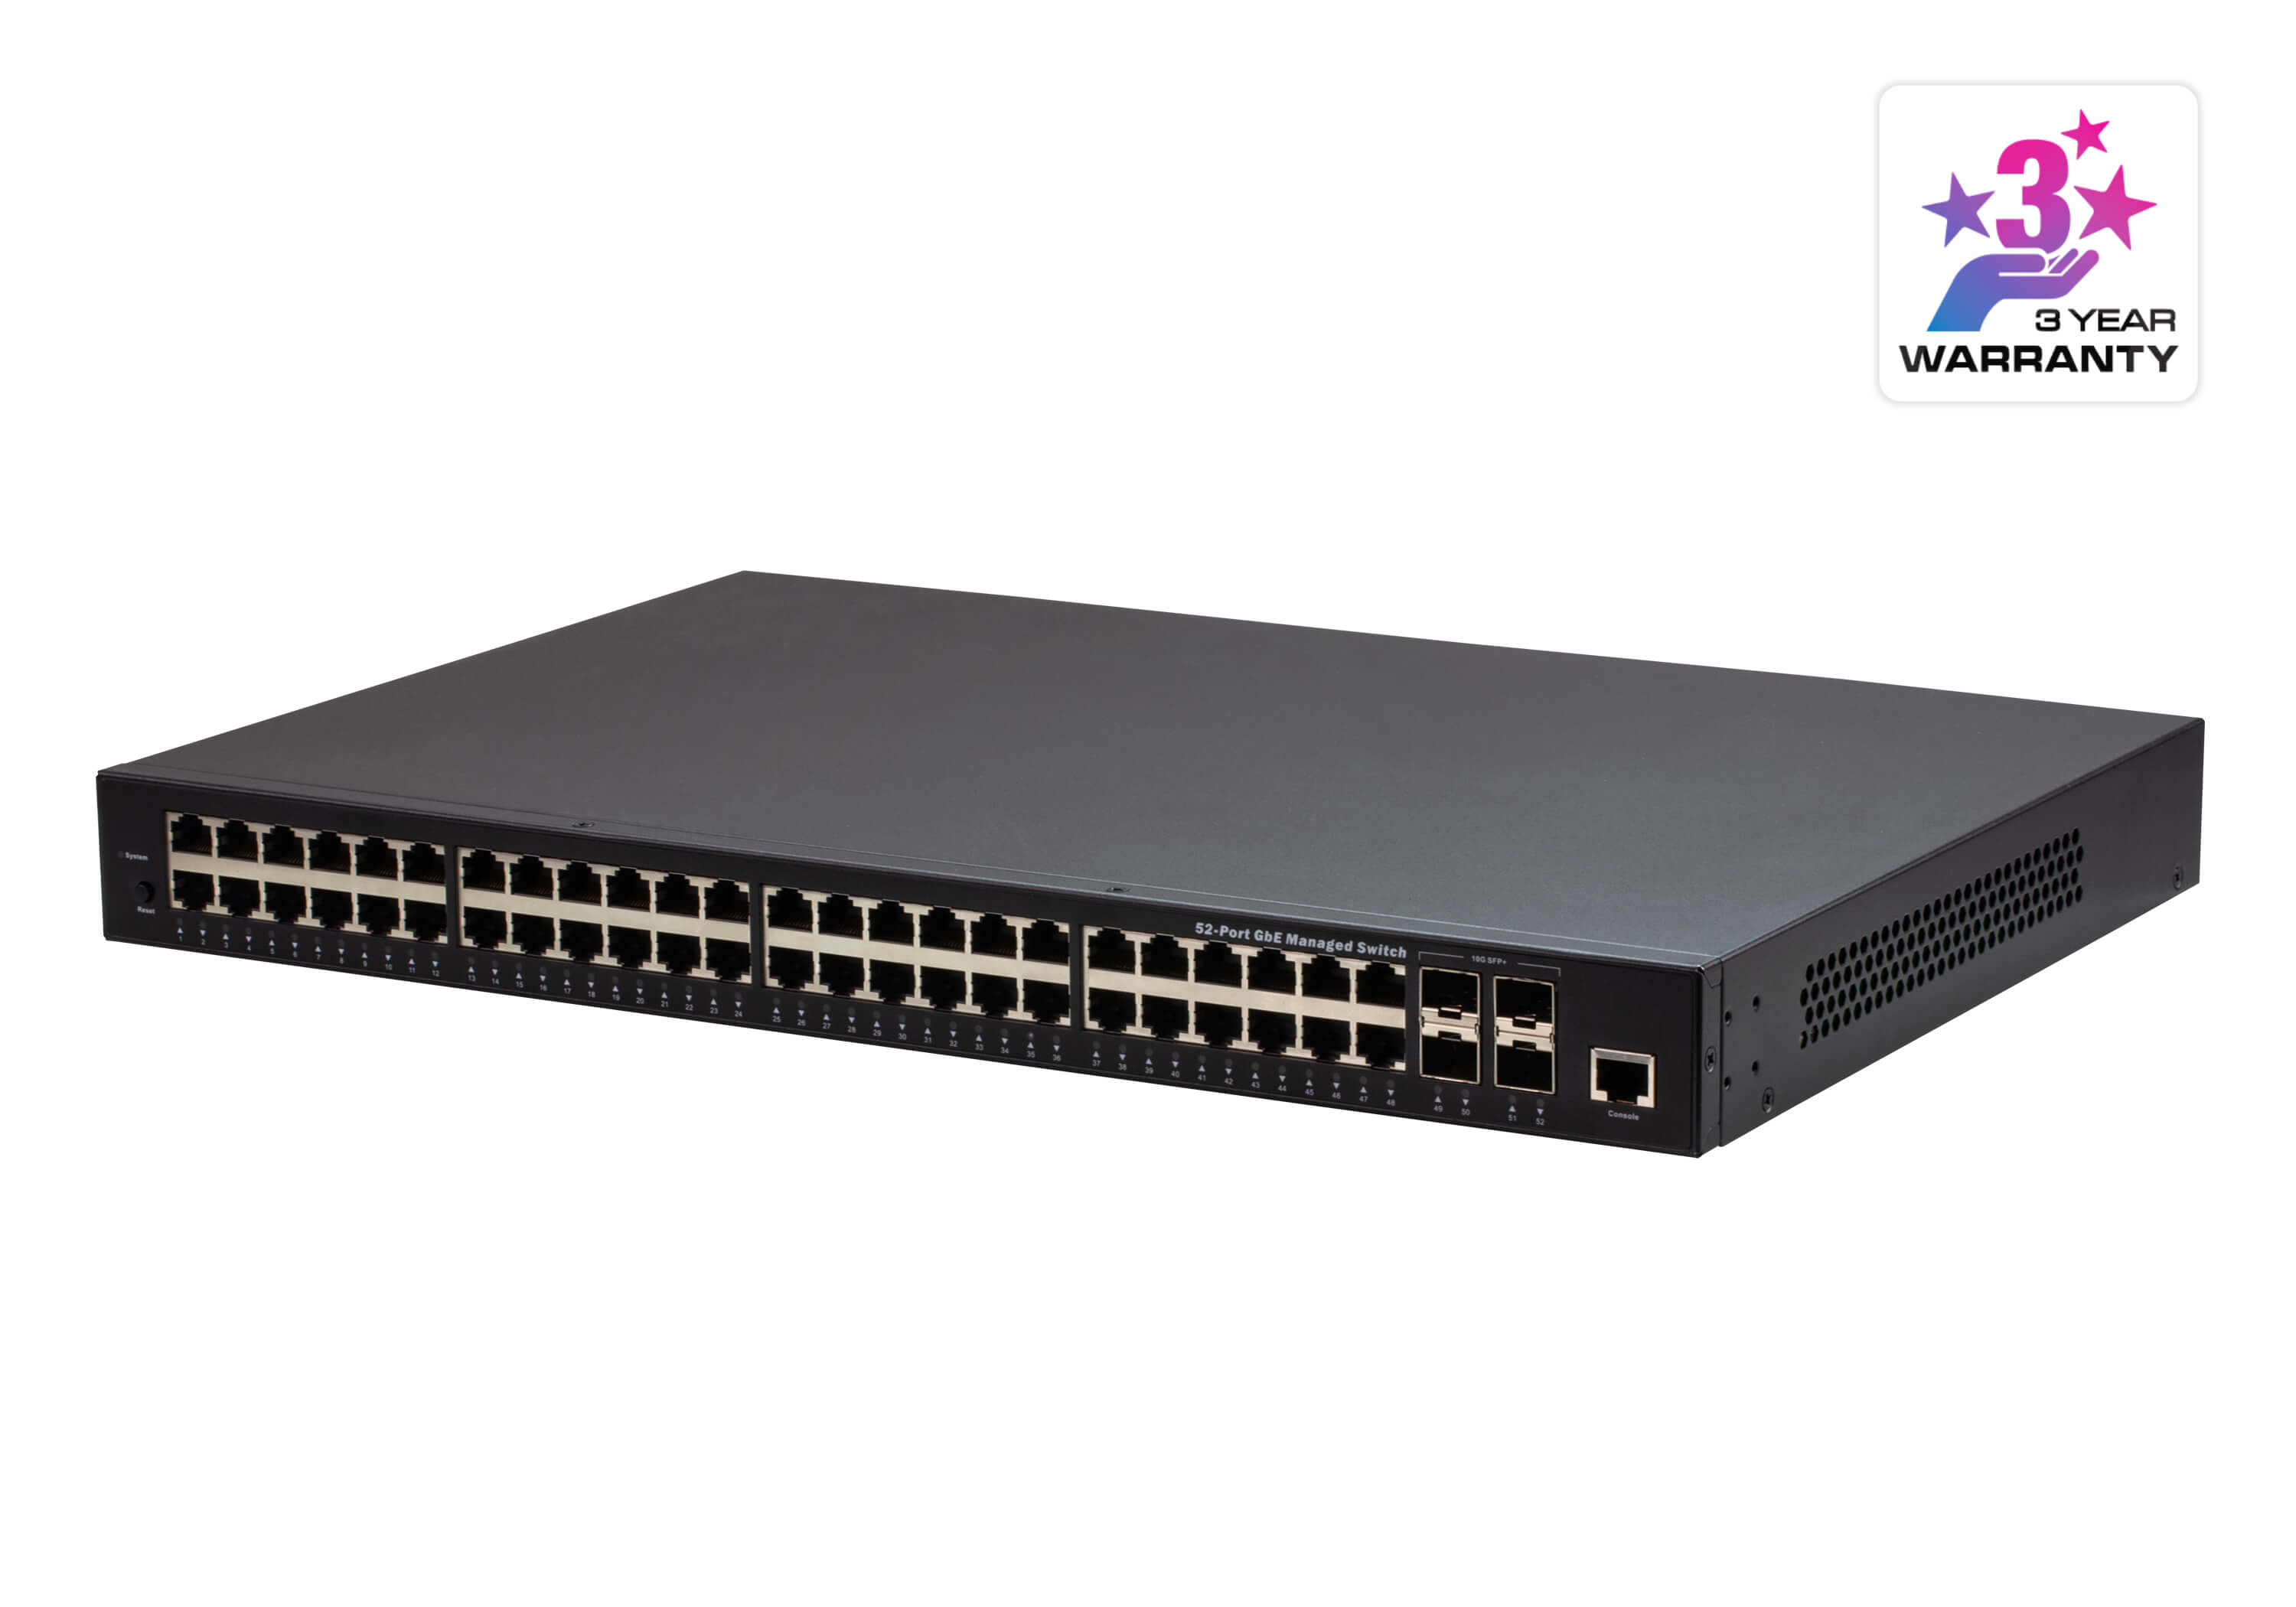 Aten Gigabit Ethernet Managed Switch, designed for use with the Aten KE/VE series of devices, 48 RJ-45 ports, IGMP v1/v2/v3 Snooping, IGMP, v1/v2 Quer